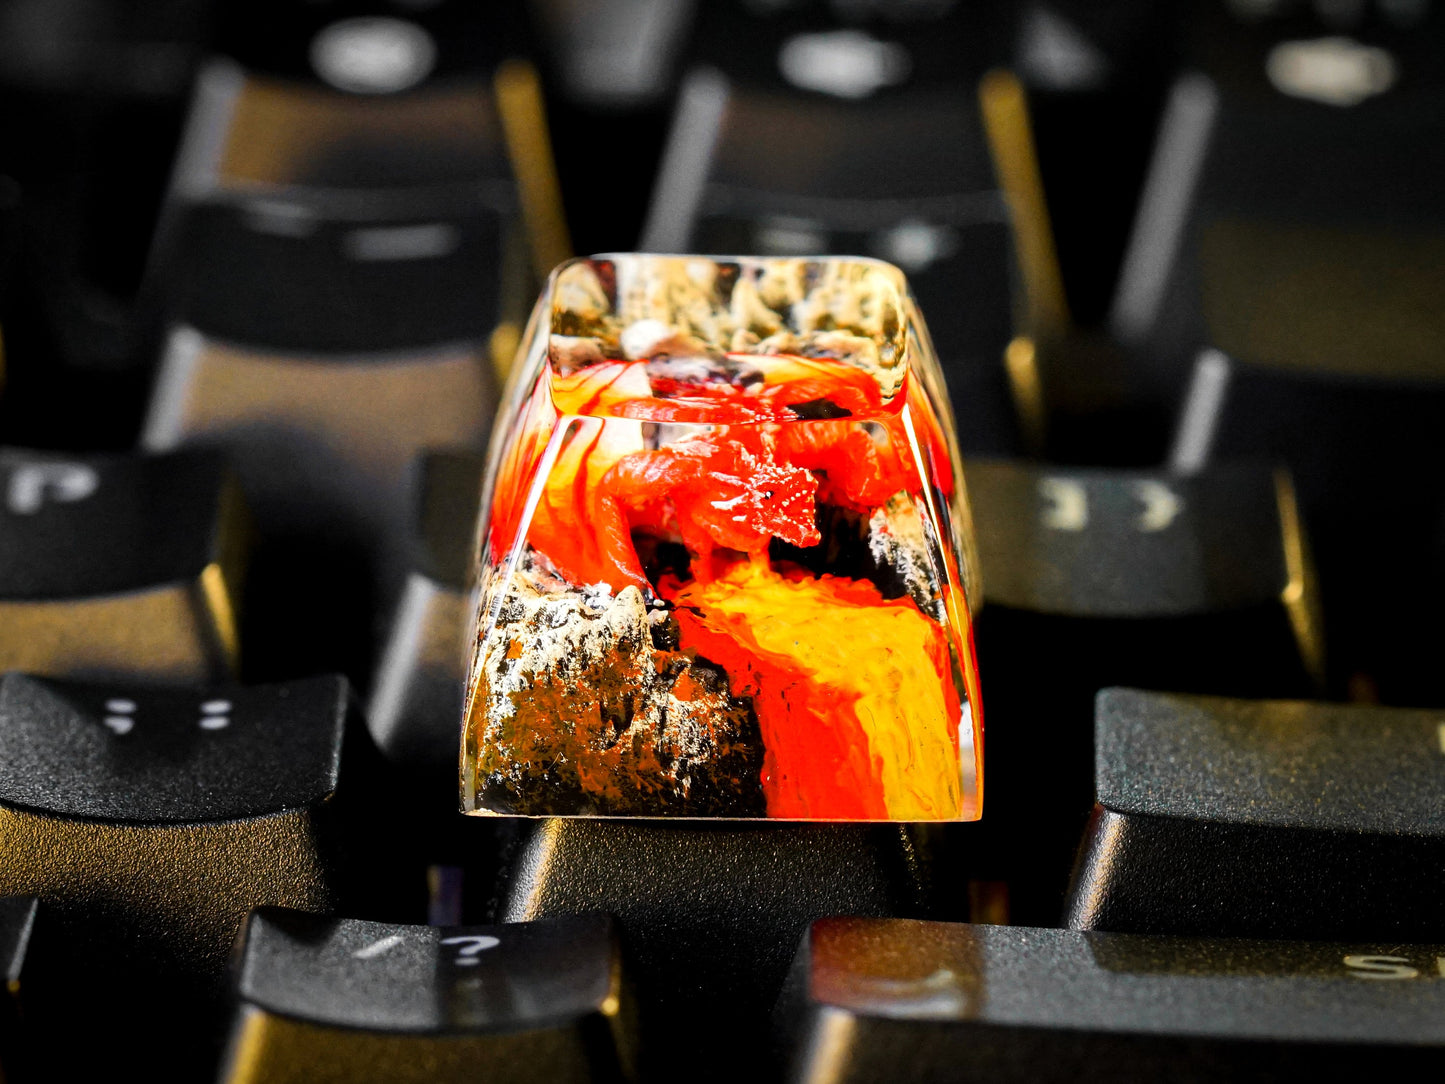 Orange Dragon Keycap- Artisan Keycap- SA Profile Keycap- Resin Keycap- Keycap for Cherry MX Keyboard - Datkey Studio